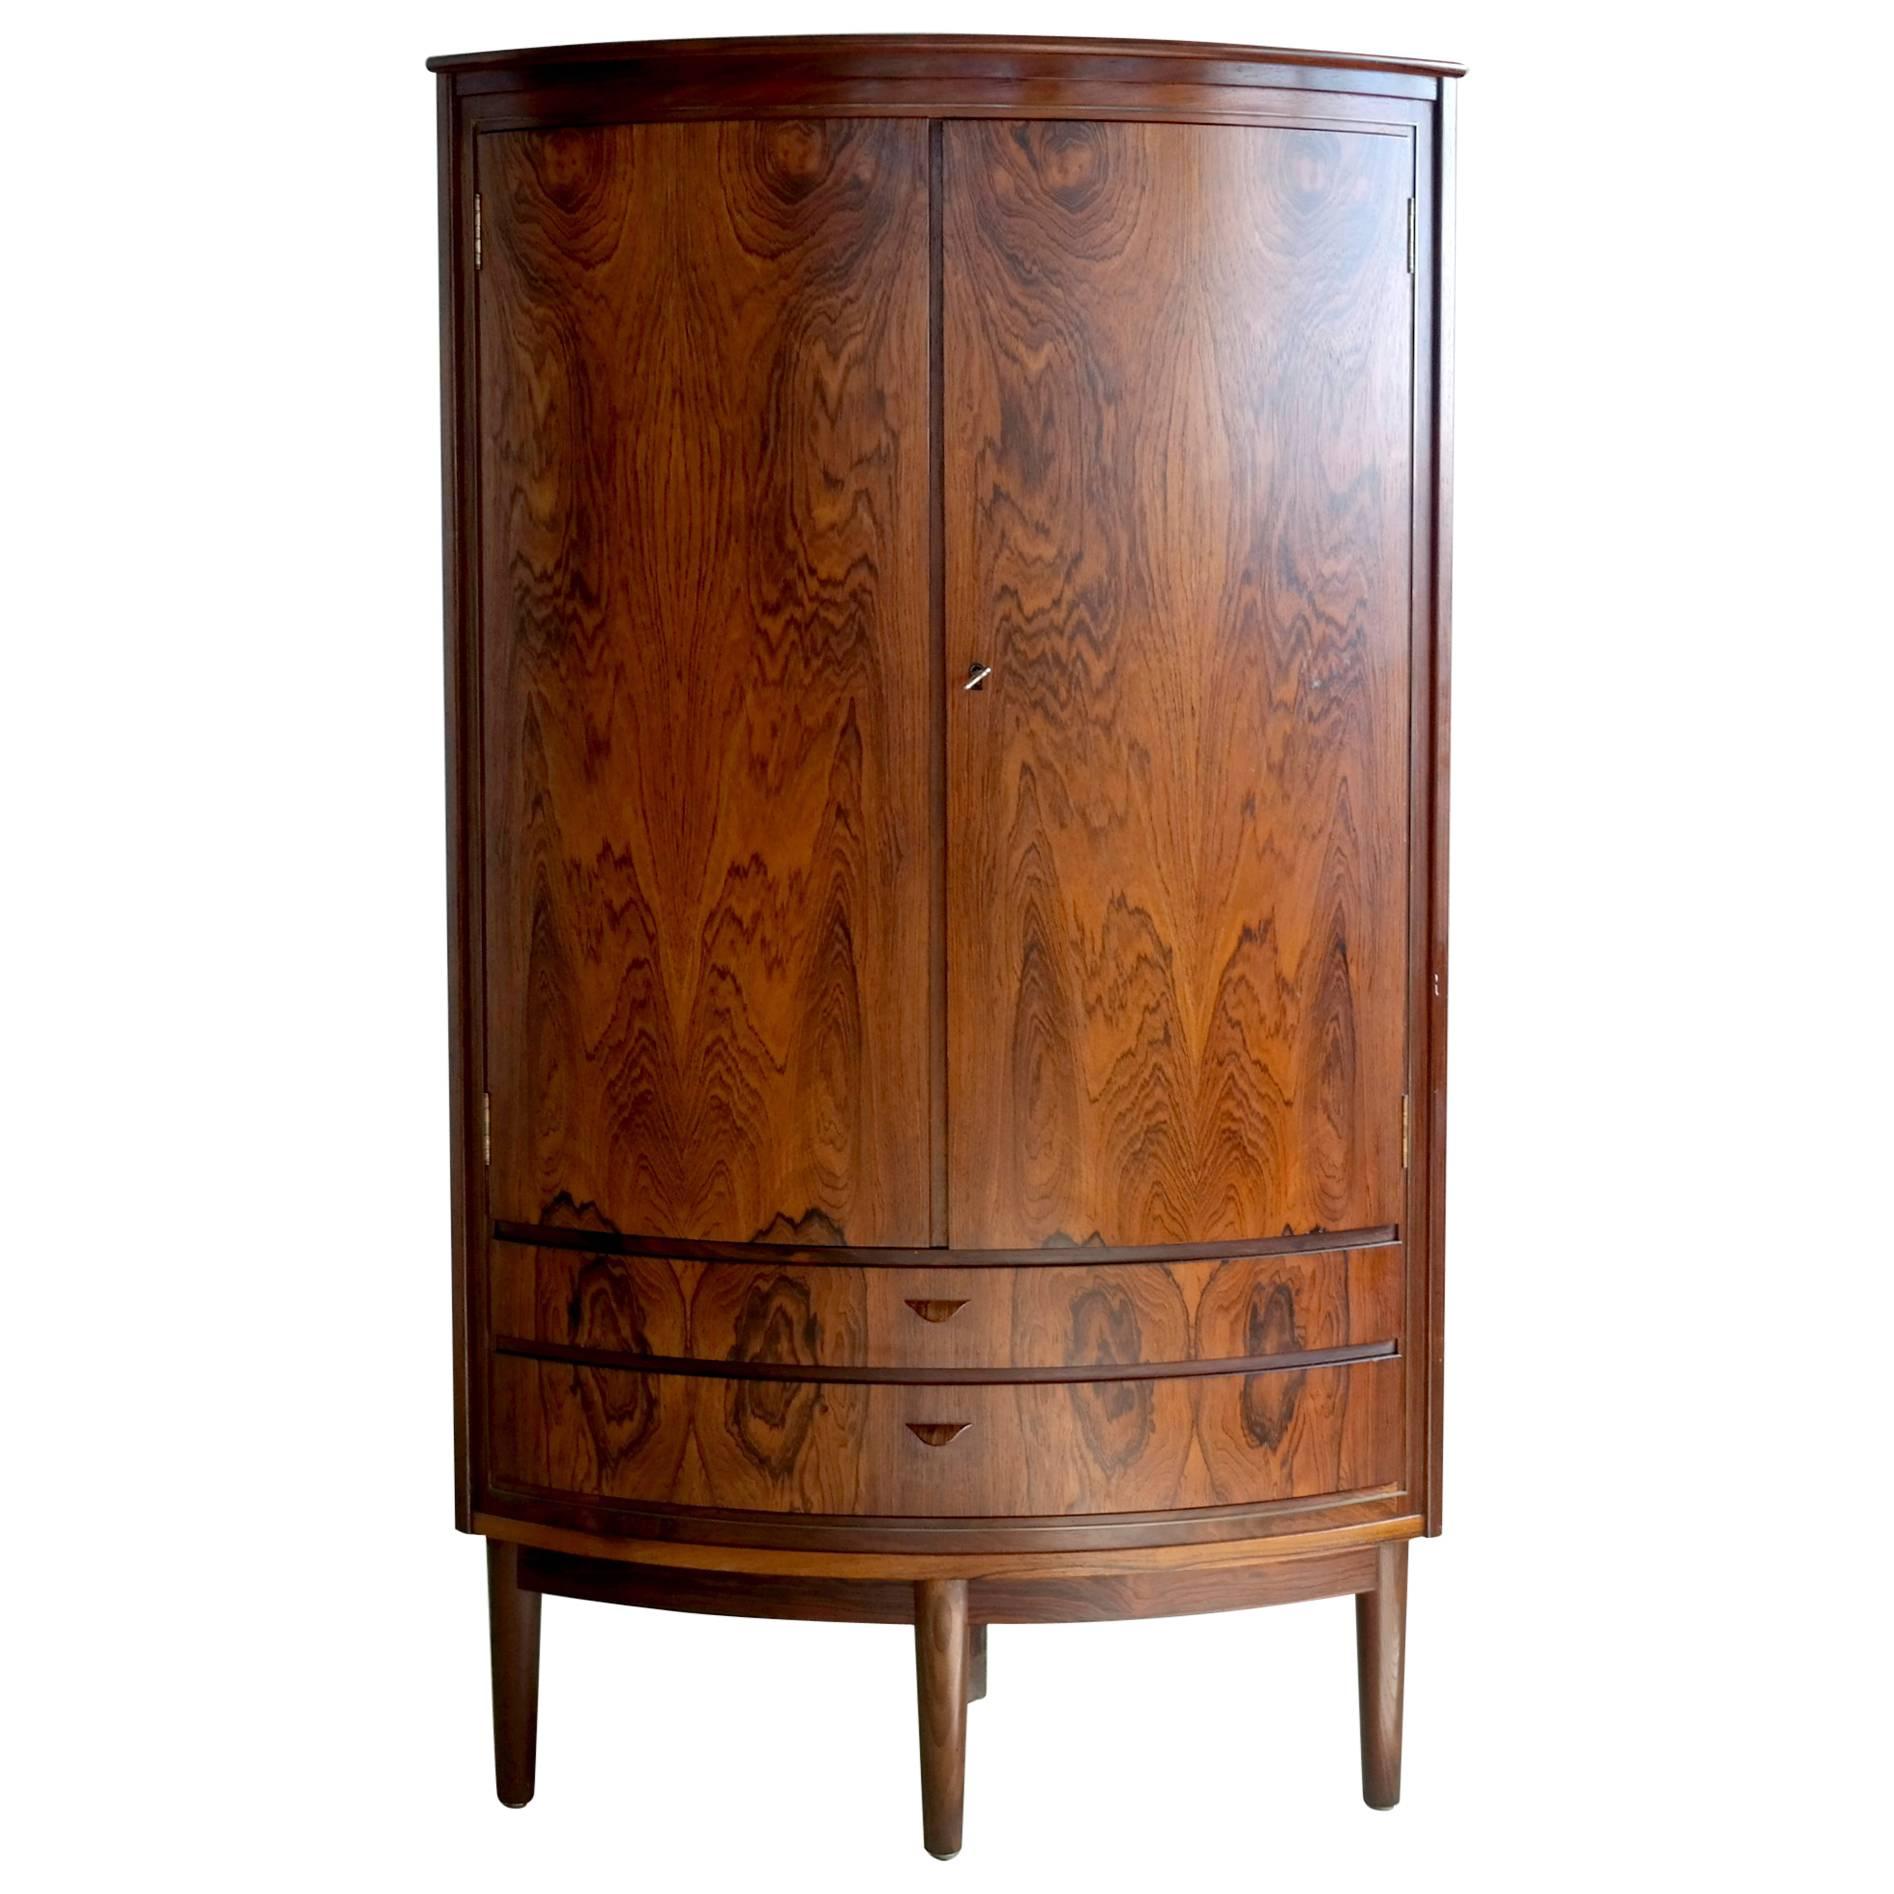 Superb Rosewood Corner Cabinet Attributed to Agner Christoffersen